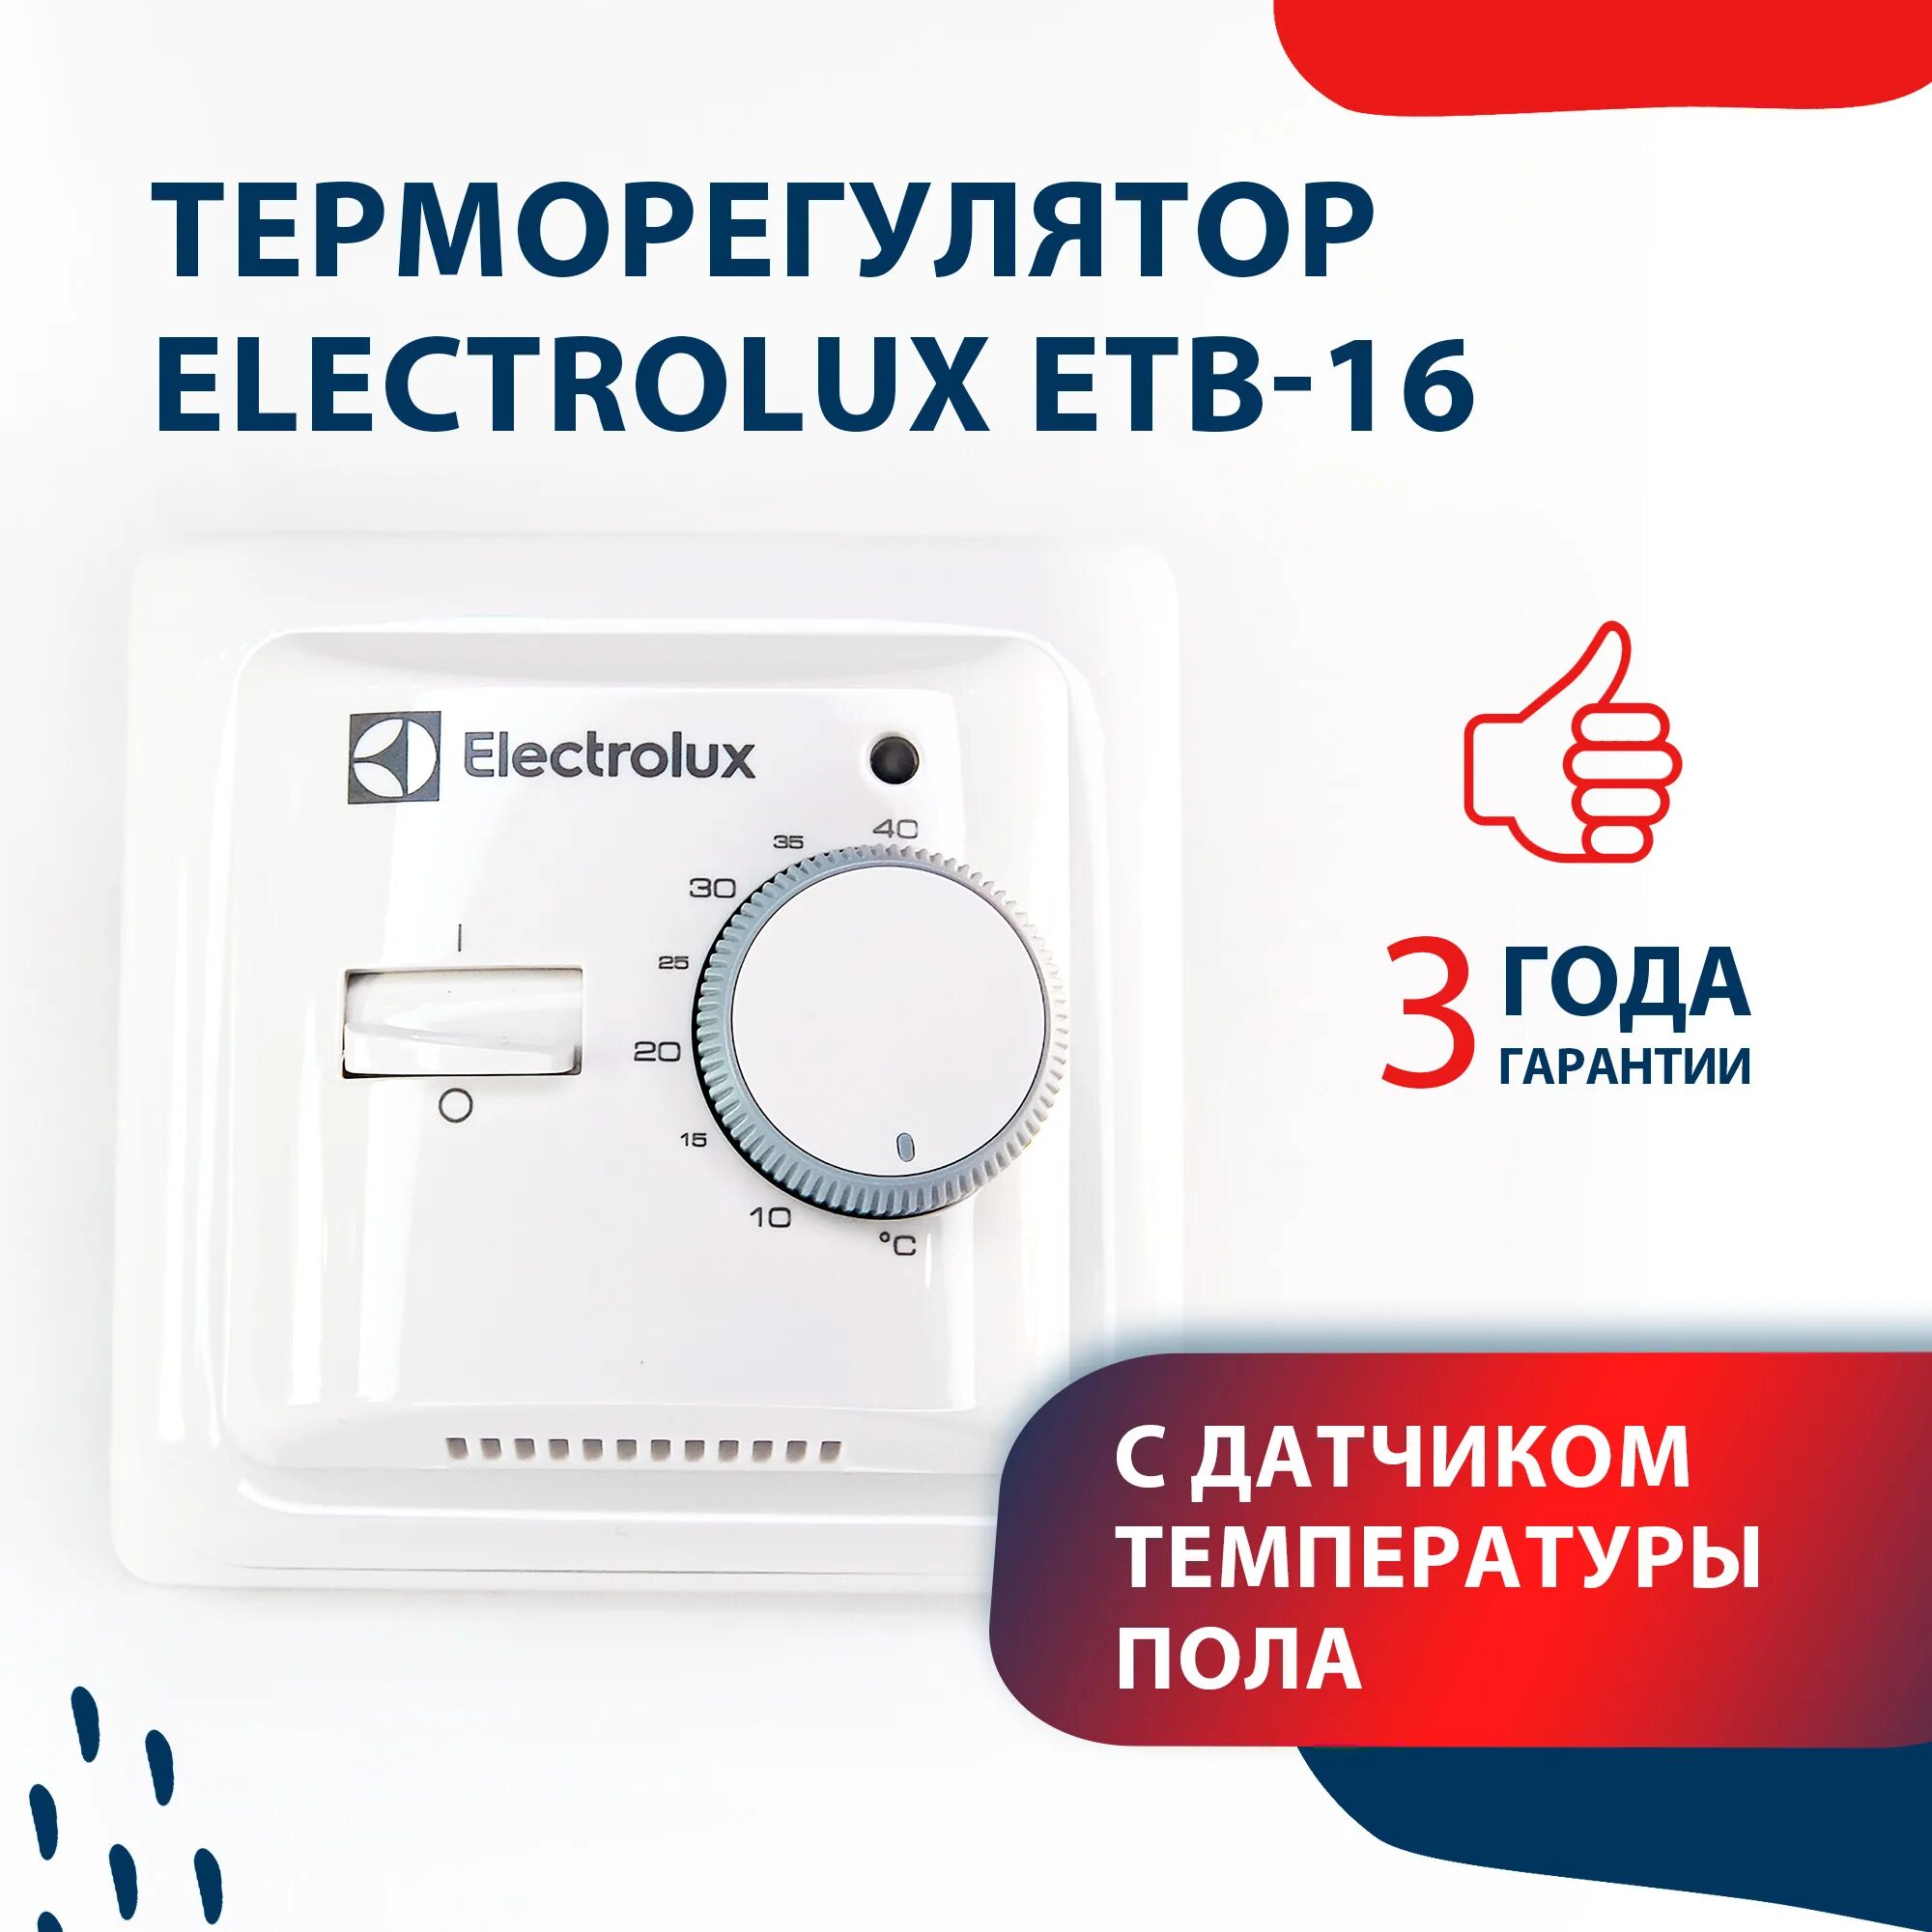 Термостат Electrolux. Терморегулятор Электролюкс. Терморегулятор Electrolux ETB-16. Терморегулятор для конвектора Электролюкс.